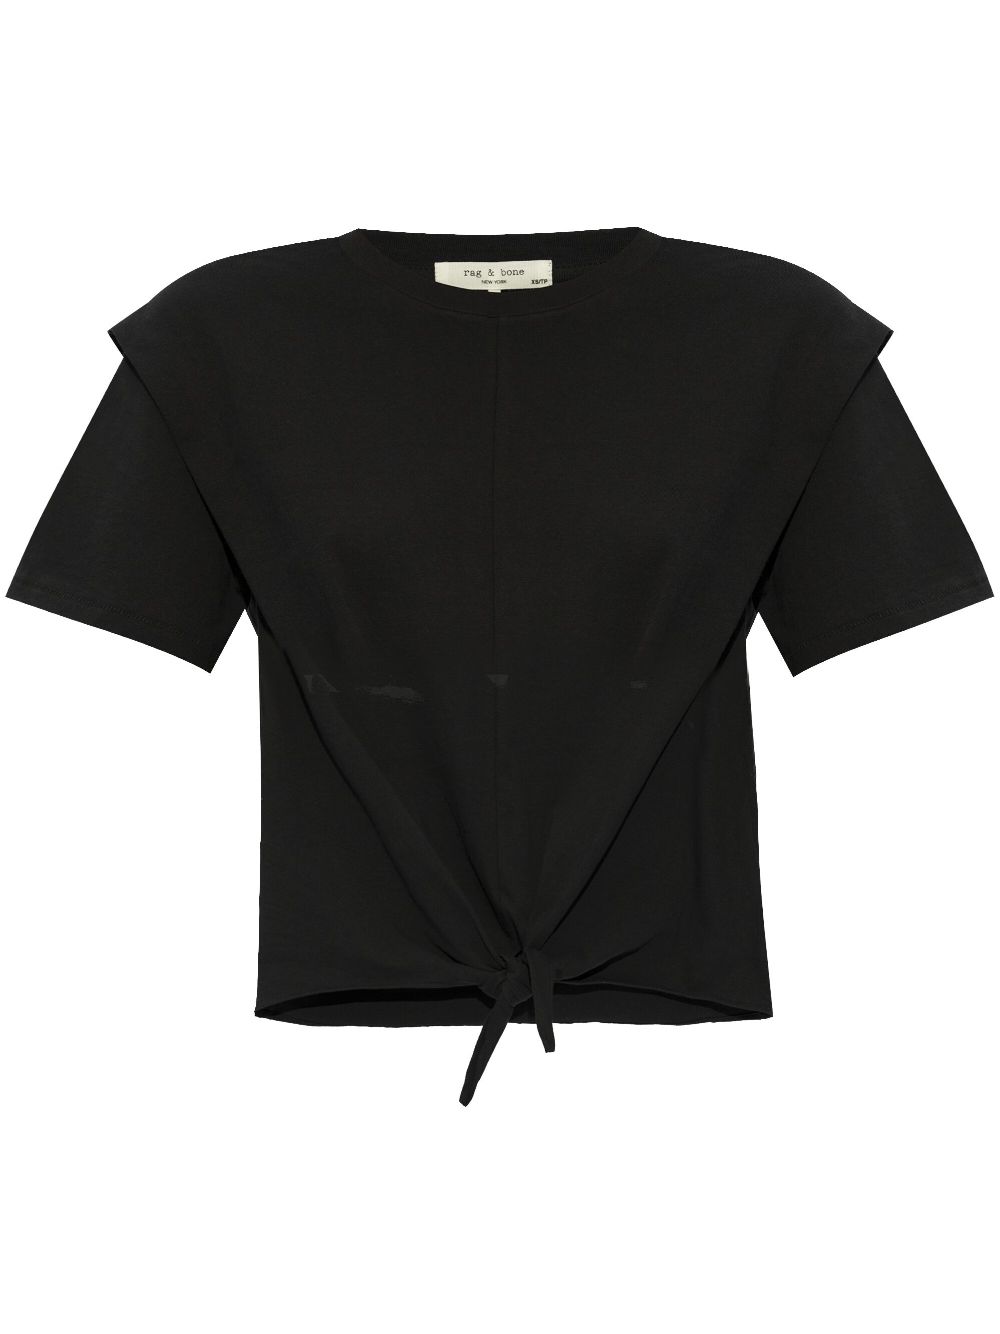 Rag & bone Mica T-shirt met geknoopt detail Zwart